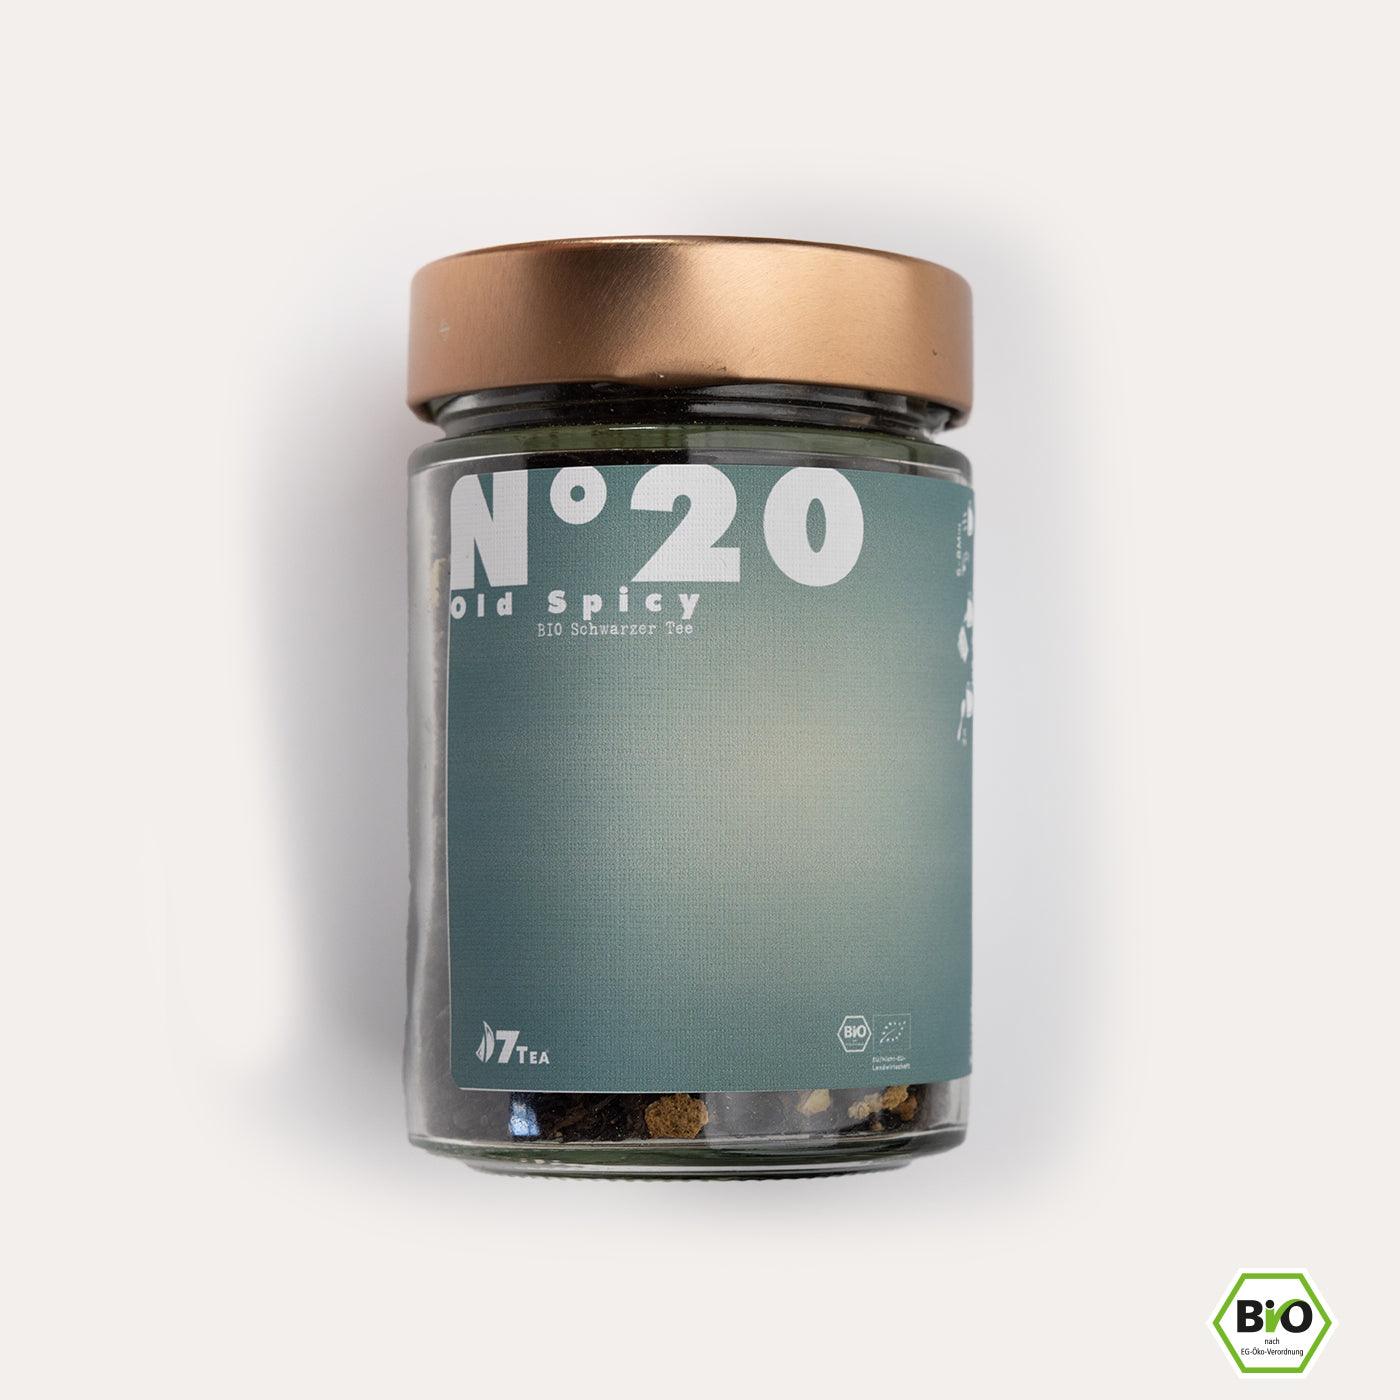 N°20 | Old Spicy - Orange, Ingwer & Nelken - 7Tea® Bio-Tee Onlineshop